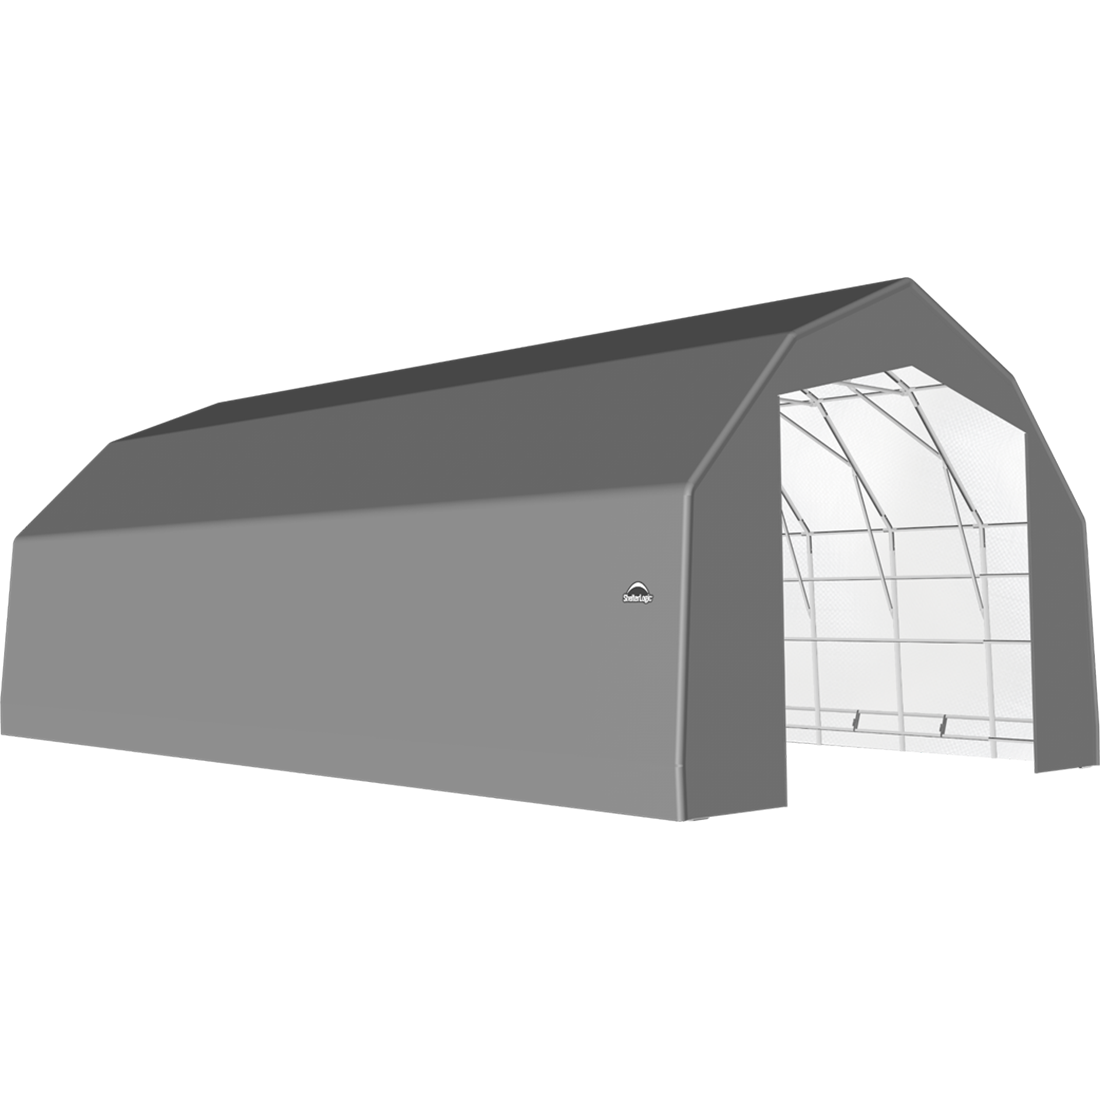 ShelterTech SP Series Barn Shelter, 25 ft. x 48 ft. x 17 ft. Heavy Duty PVC 14.5 oz. Gray